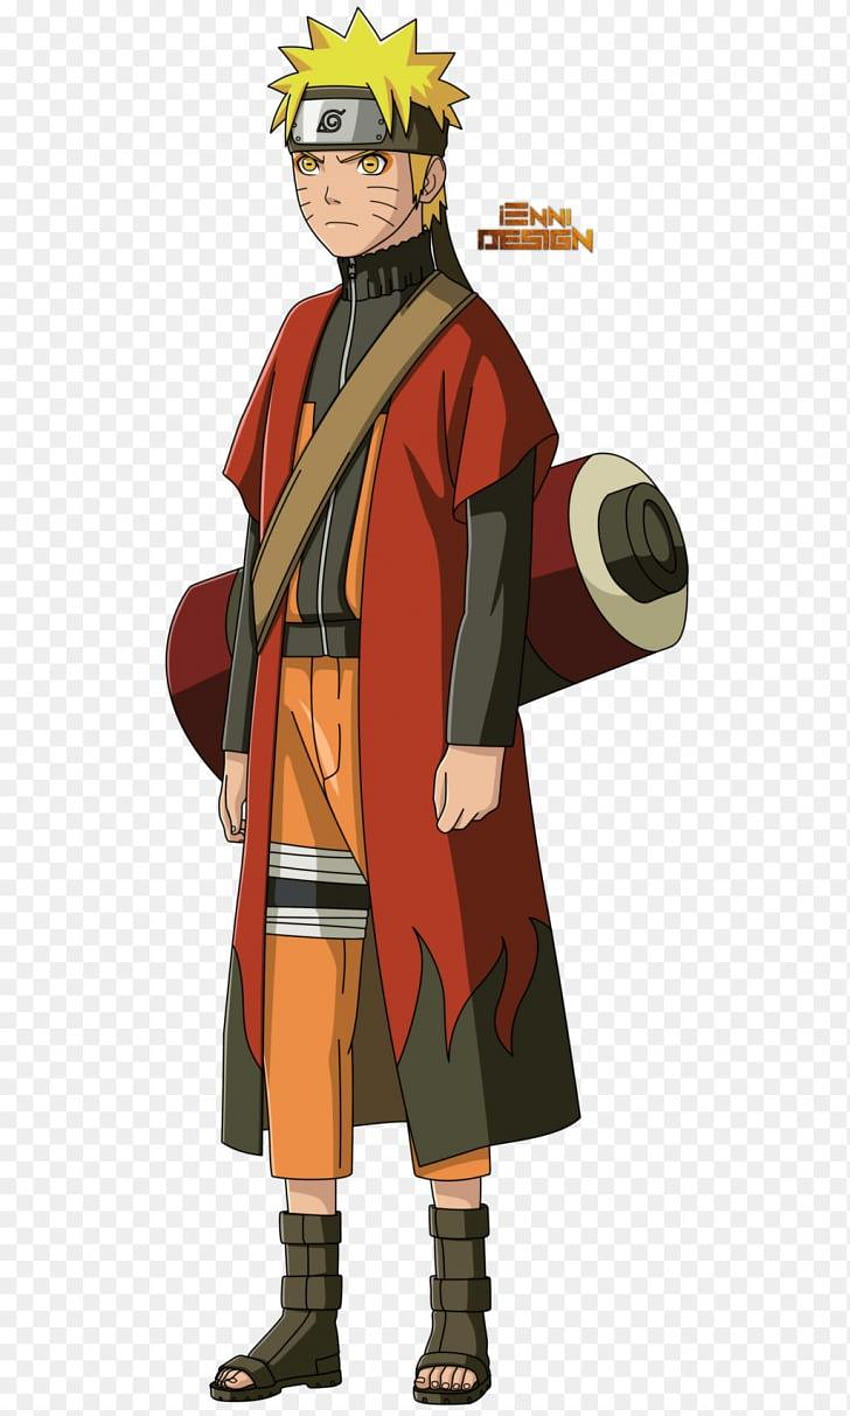 Naruto Shippuden, Tobi (Madara Uchiha) by iEnniDESIGN